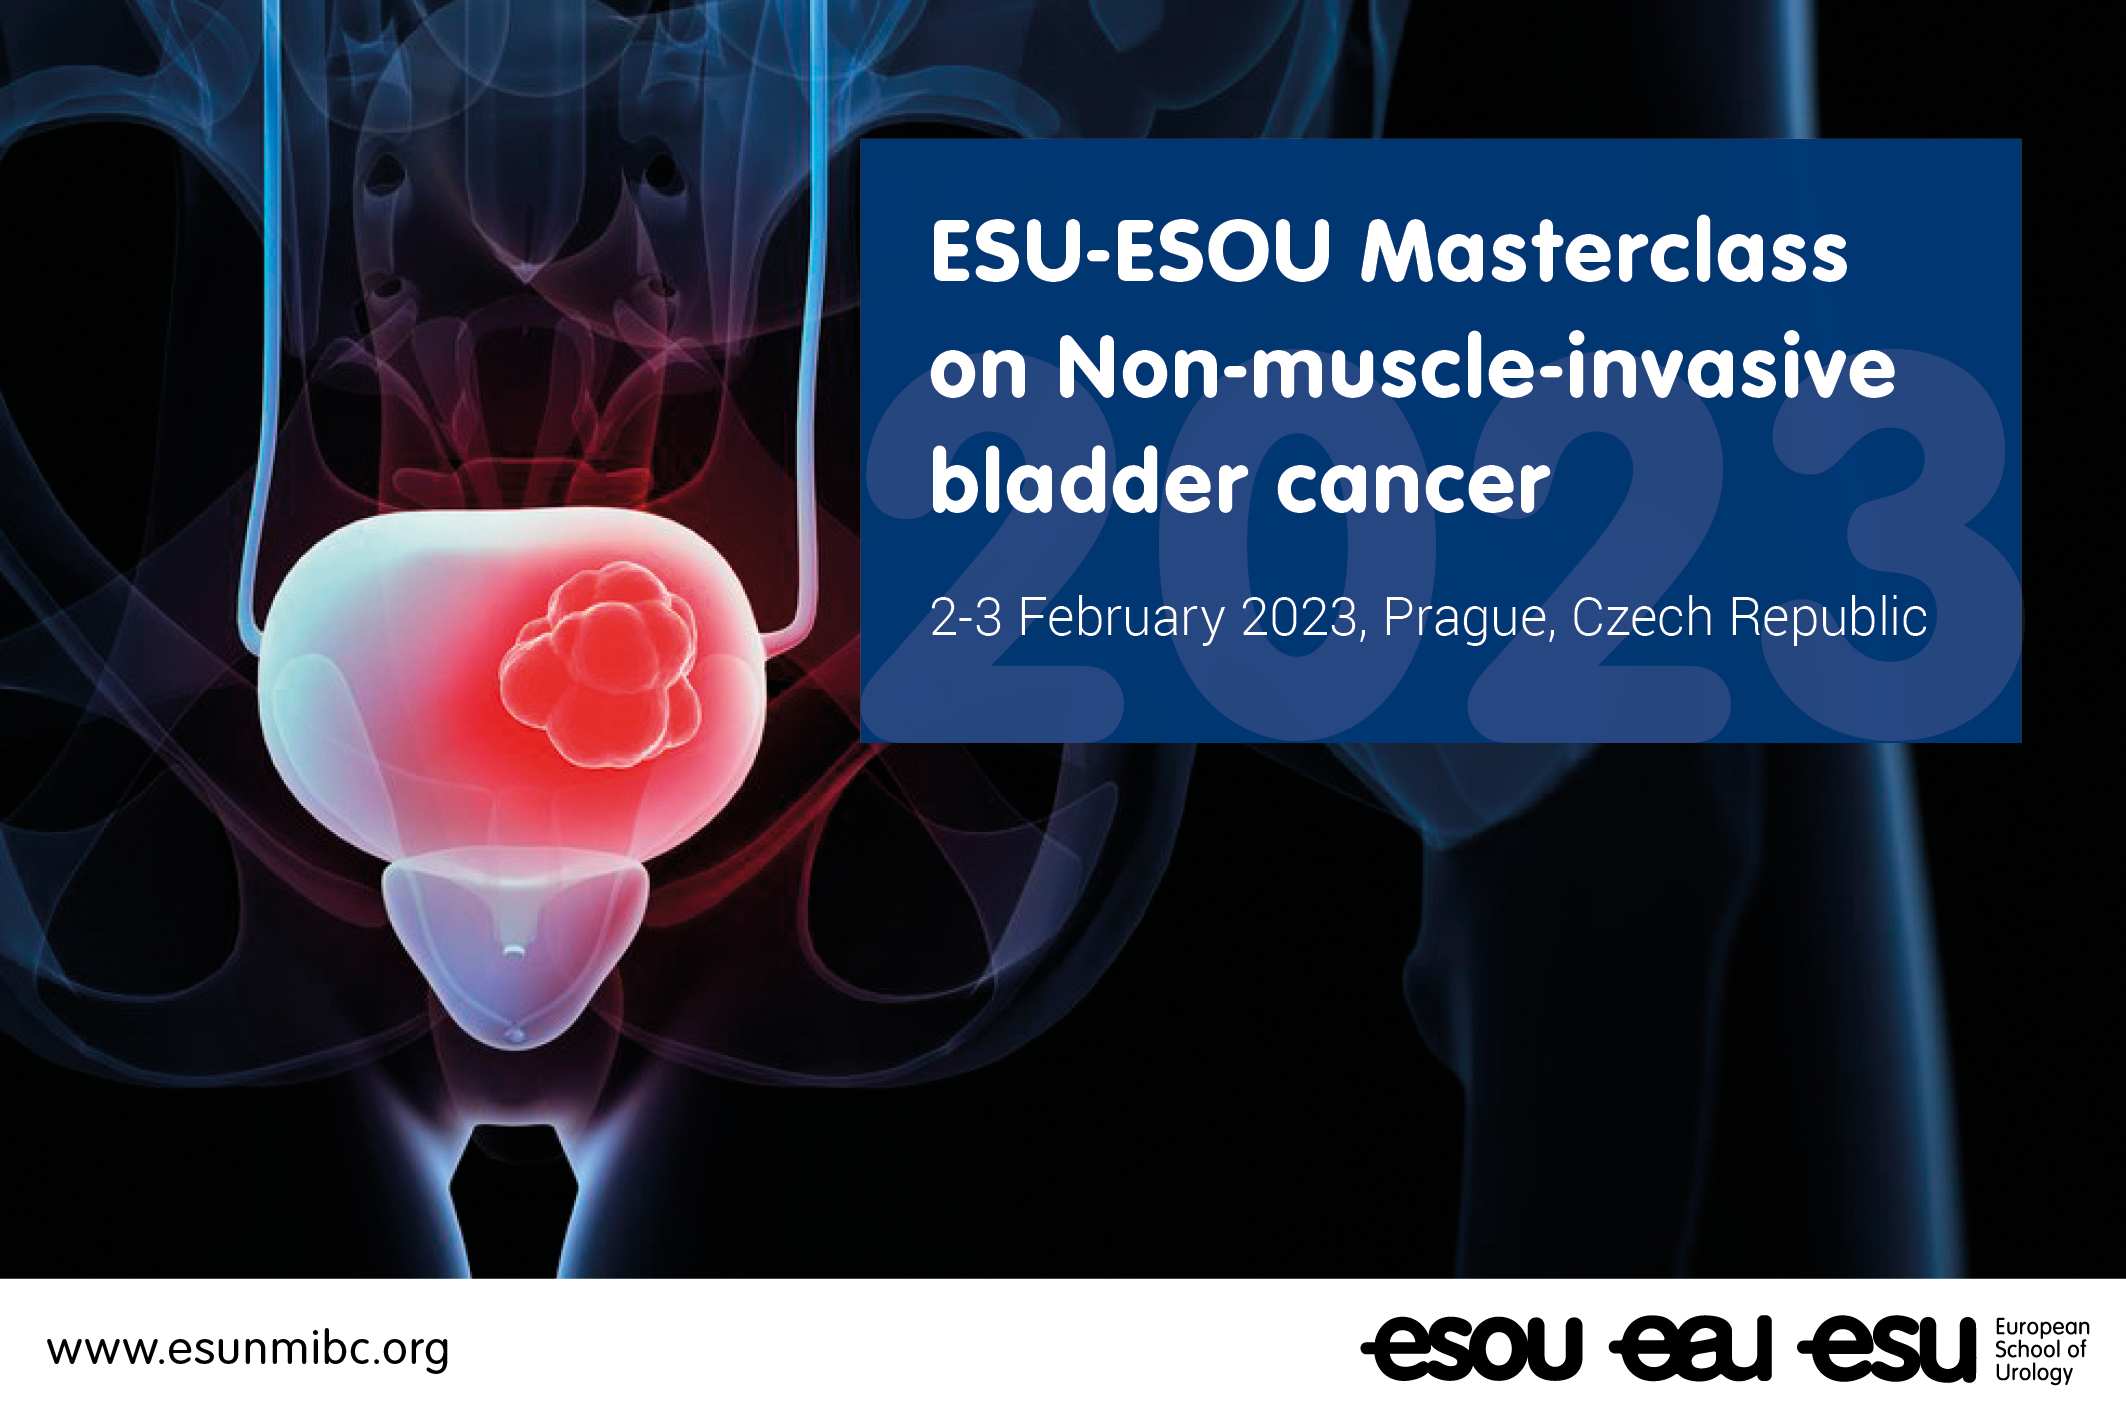 ESU-ESOU Masterclass on Non-muscle-invasive bladder cancer